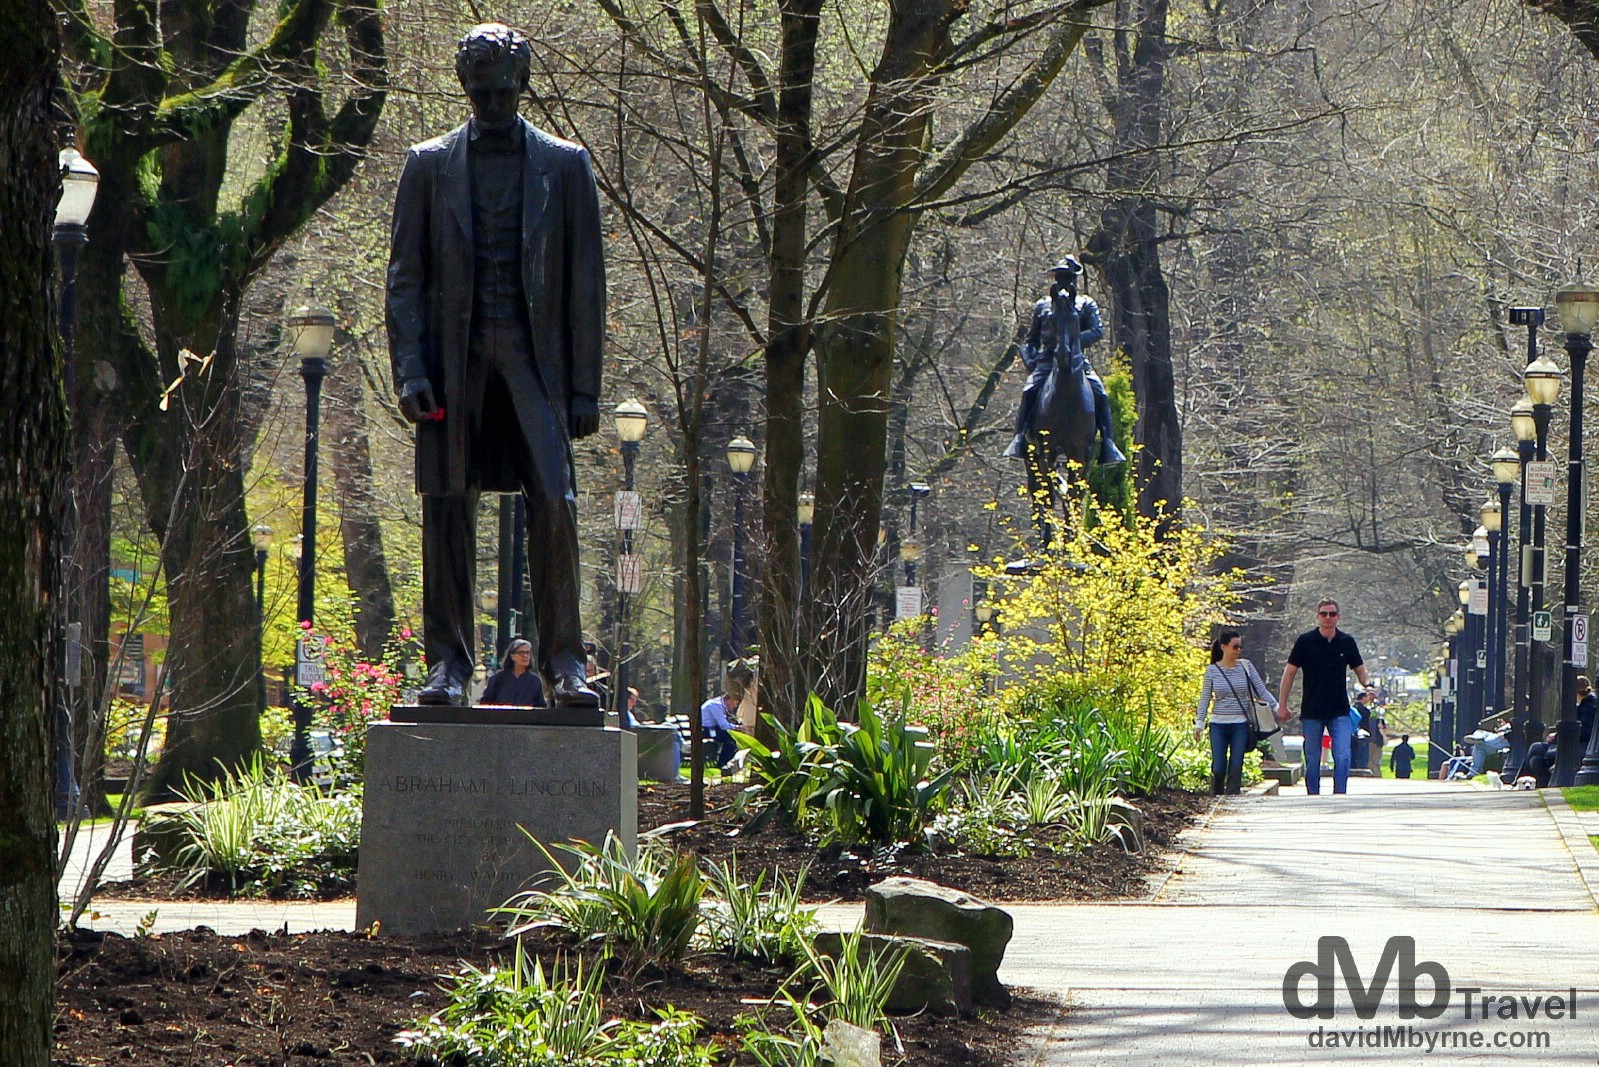 The Abraham Lincoln statue in South Park Blocks, Portland Oregon, USA. March 28, 2013. 